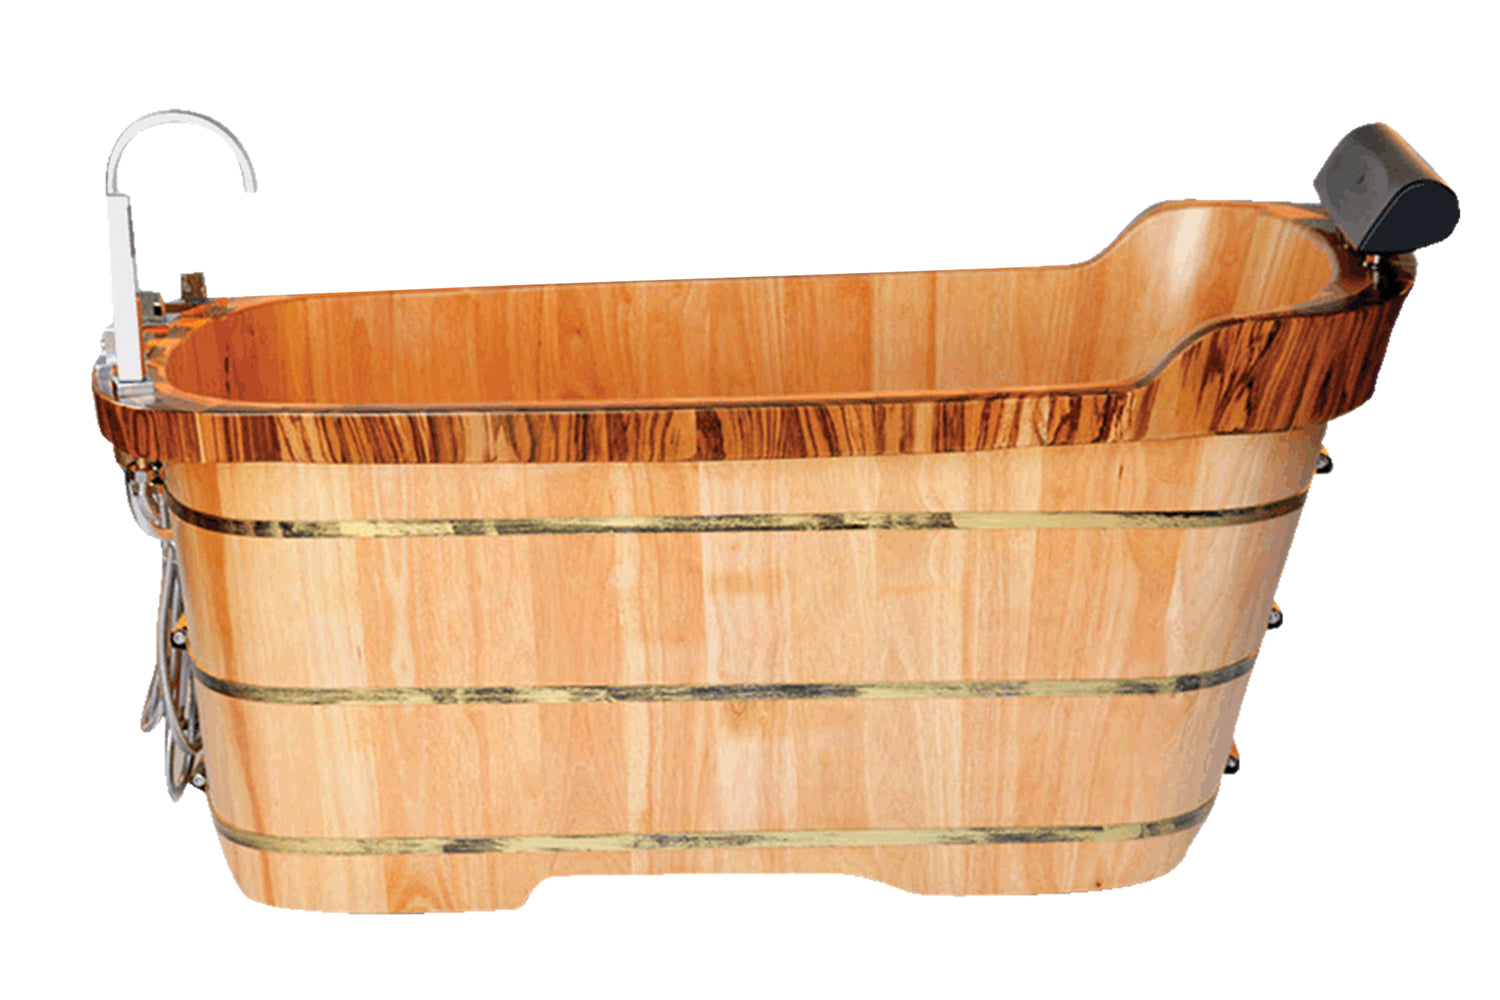 ALFI AB1148 Bathtub Free Standing Wooden with Tub Filler (59-inch)